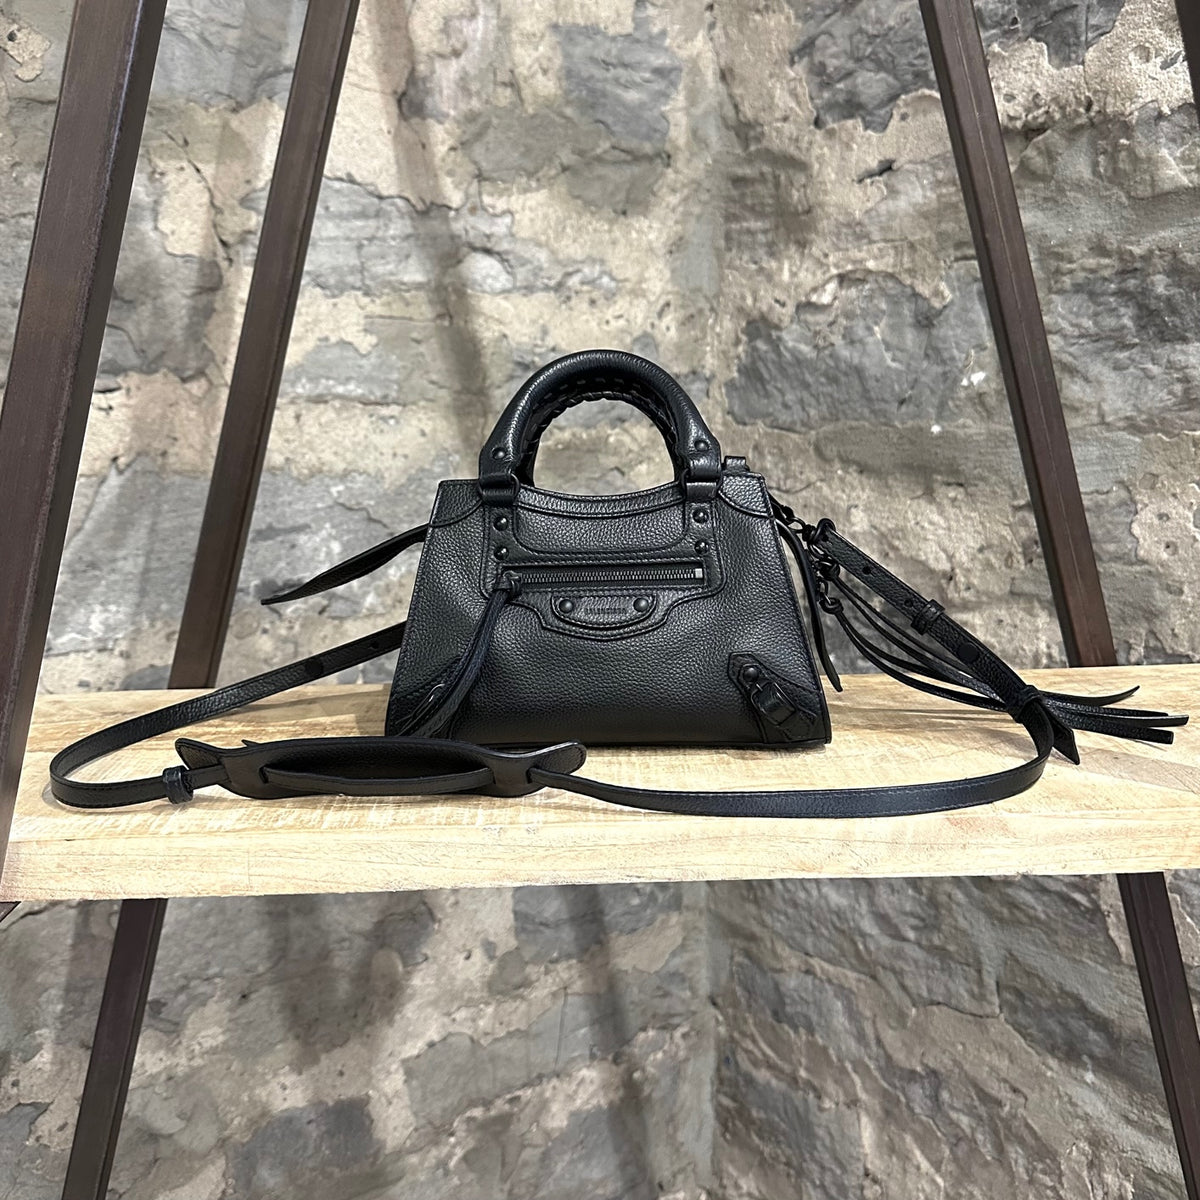 Balenciaga Neo Classic Black Leather Clutch Bag with original dustbag